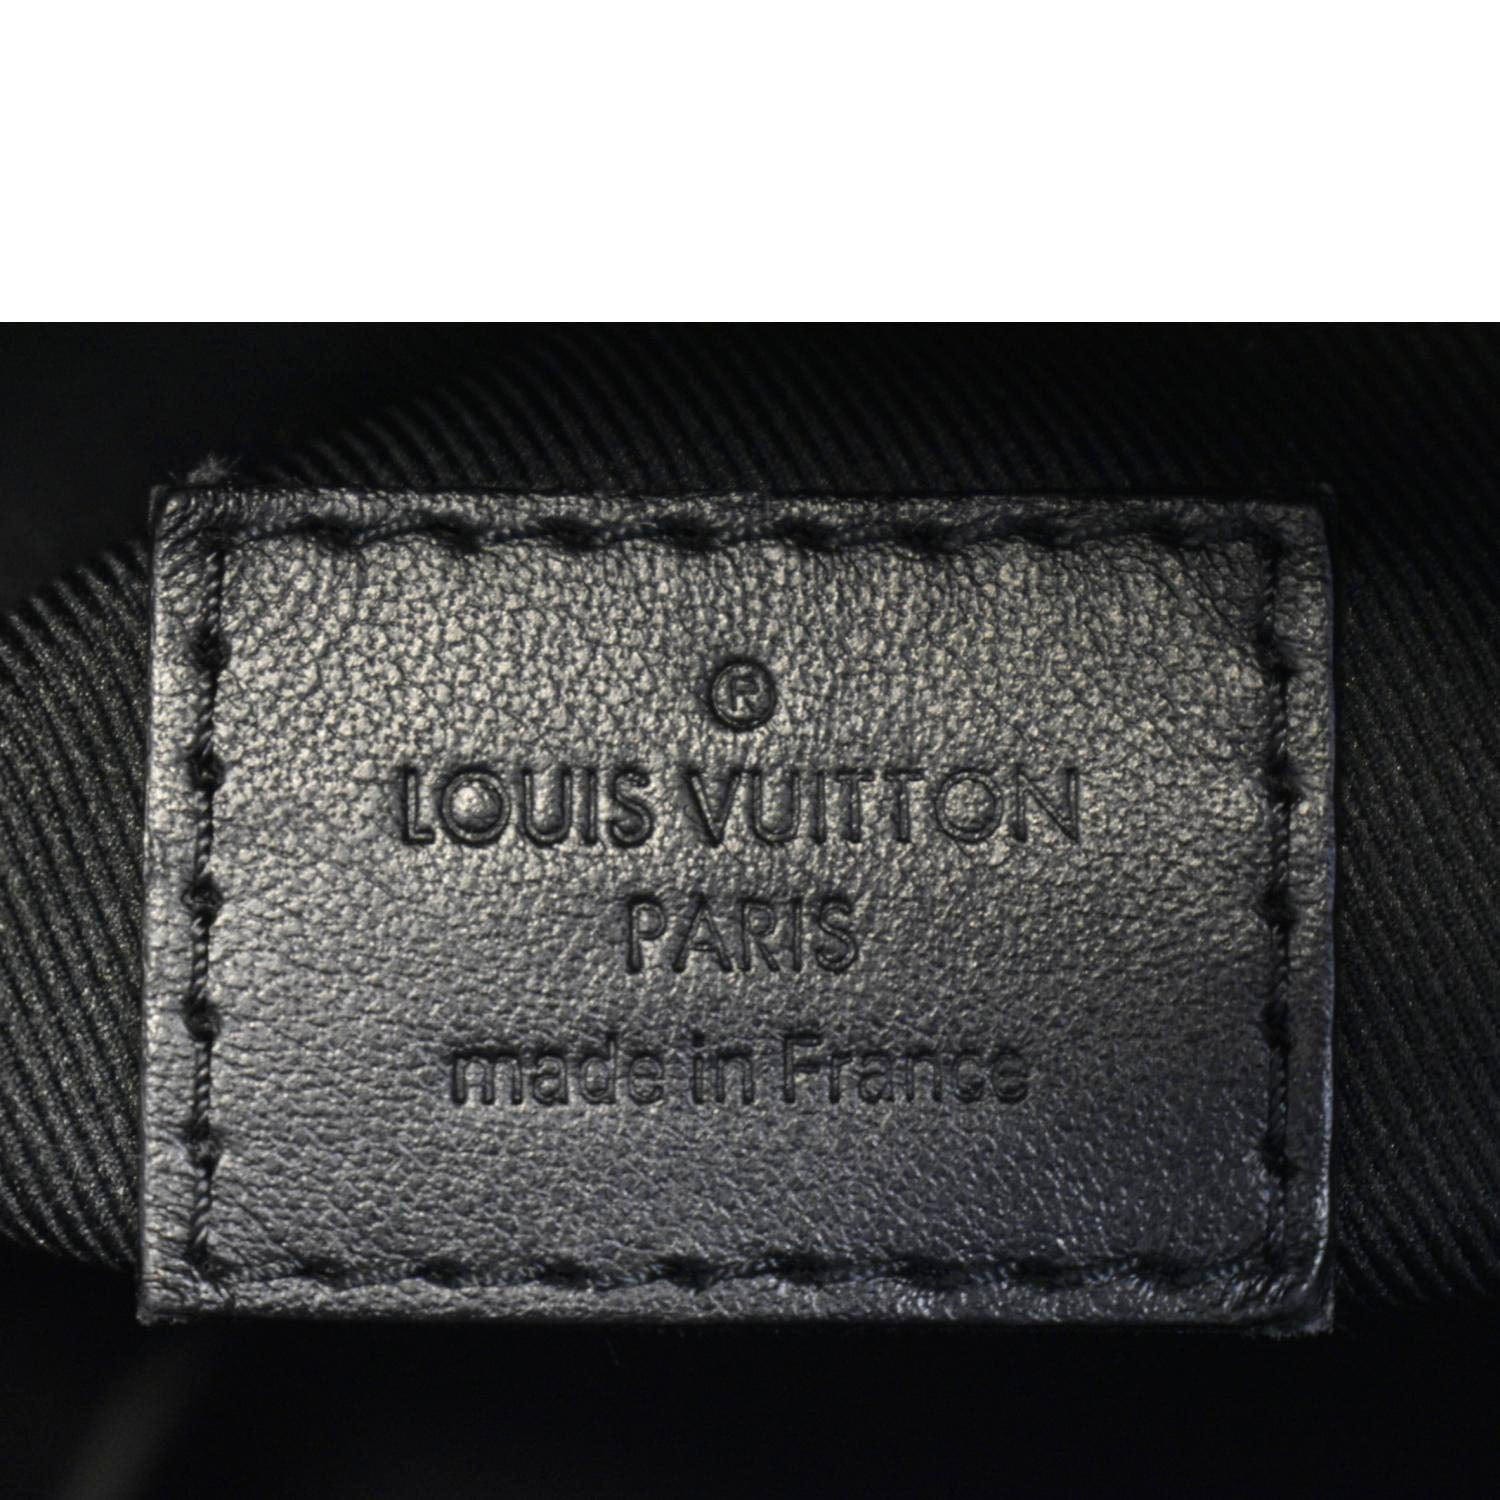 Louis Vuitton Paris France Luggage Tag Worn Brown Leather LV